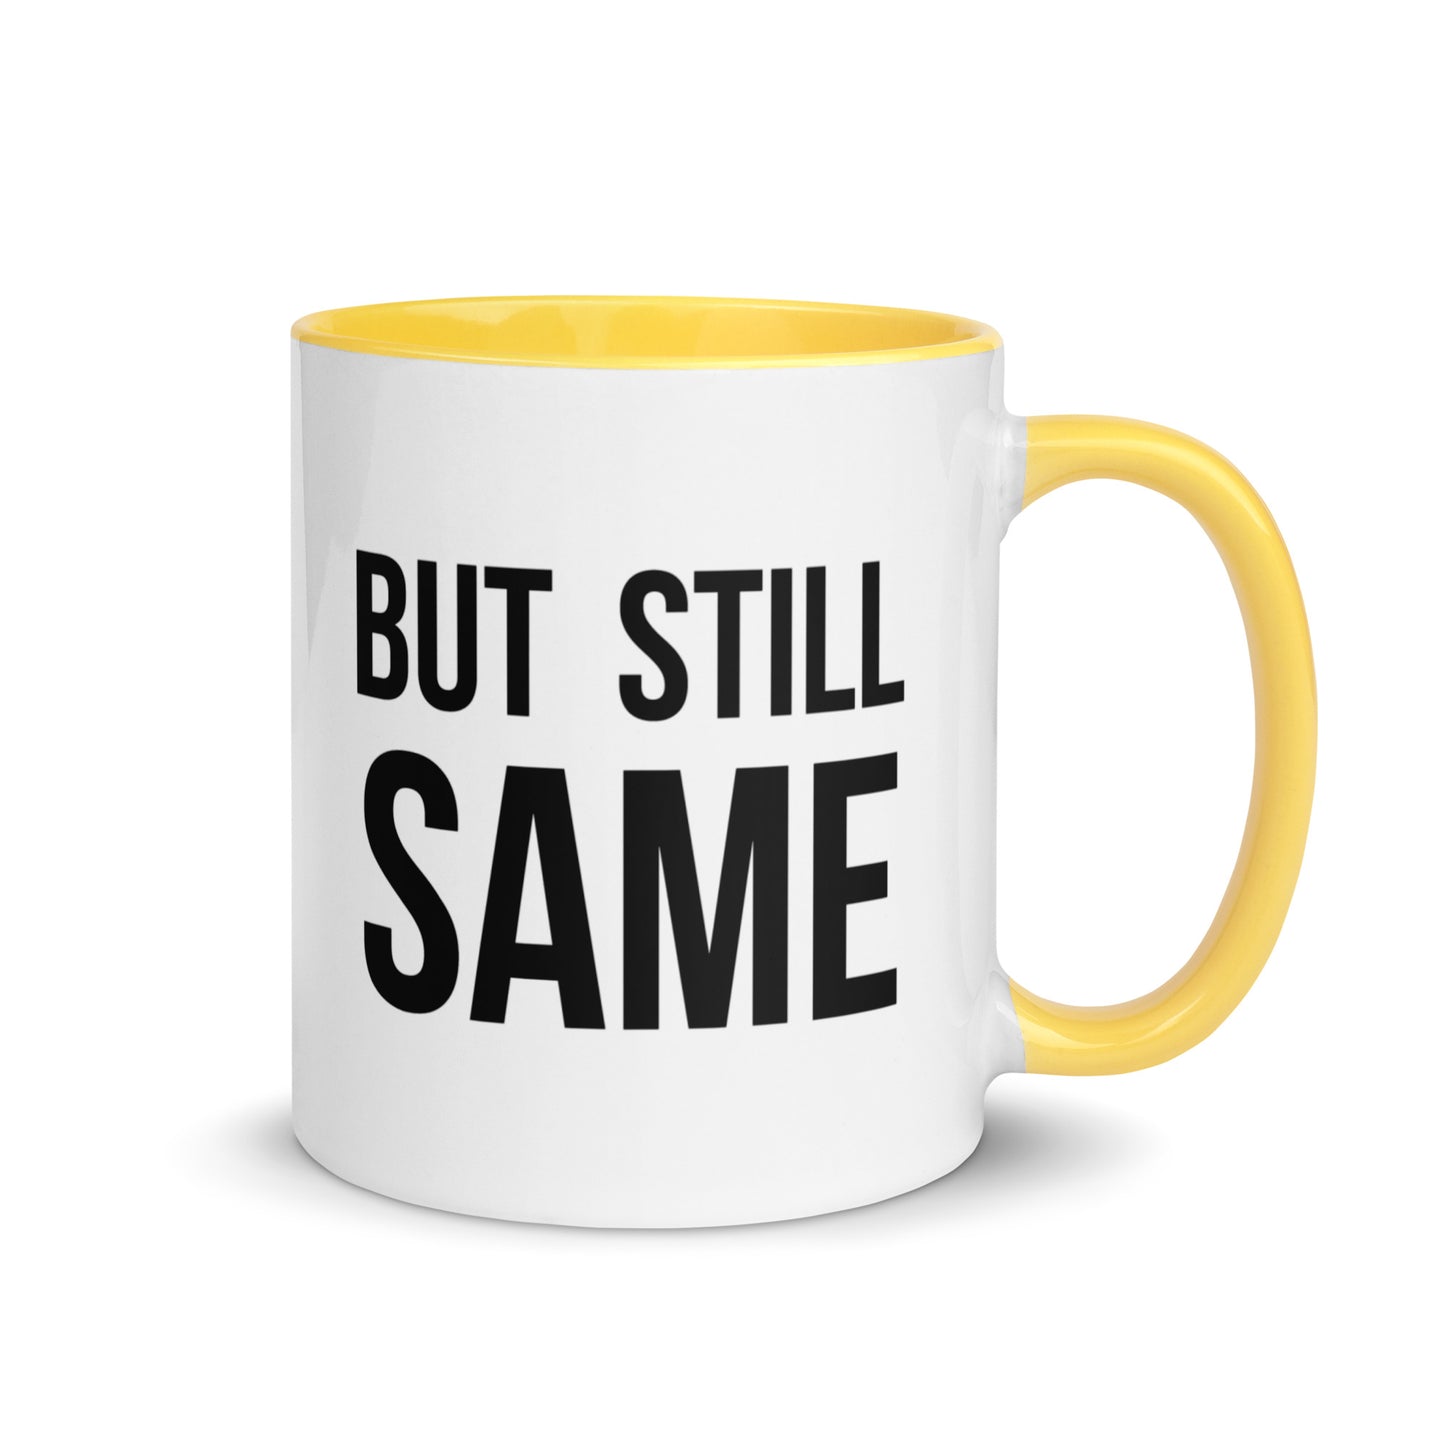 Same Same but Different Mug with Color Inside